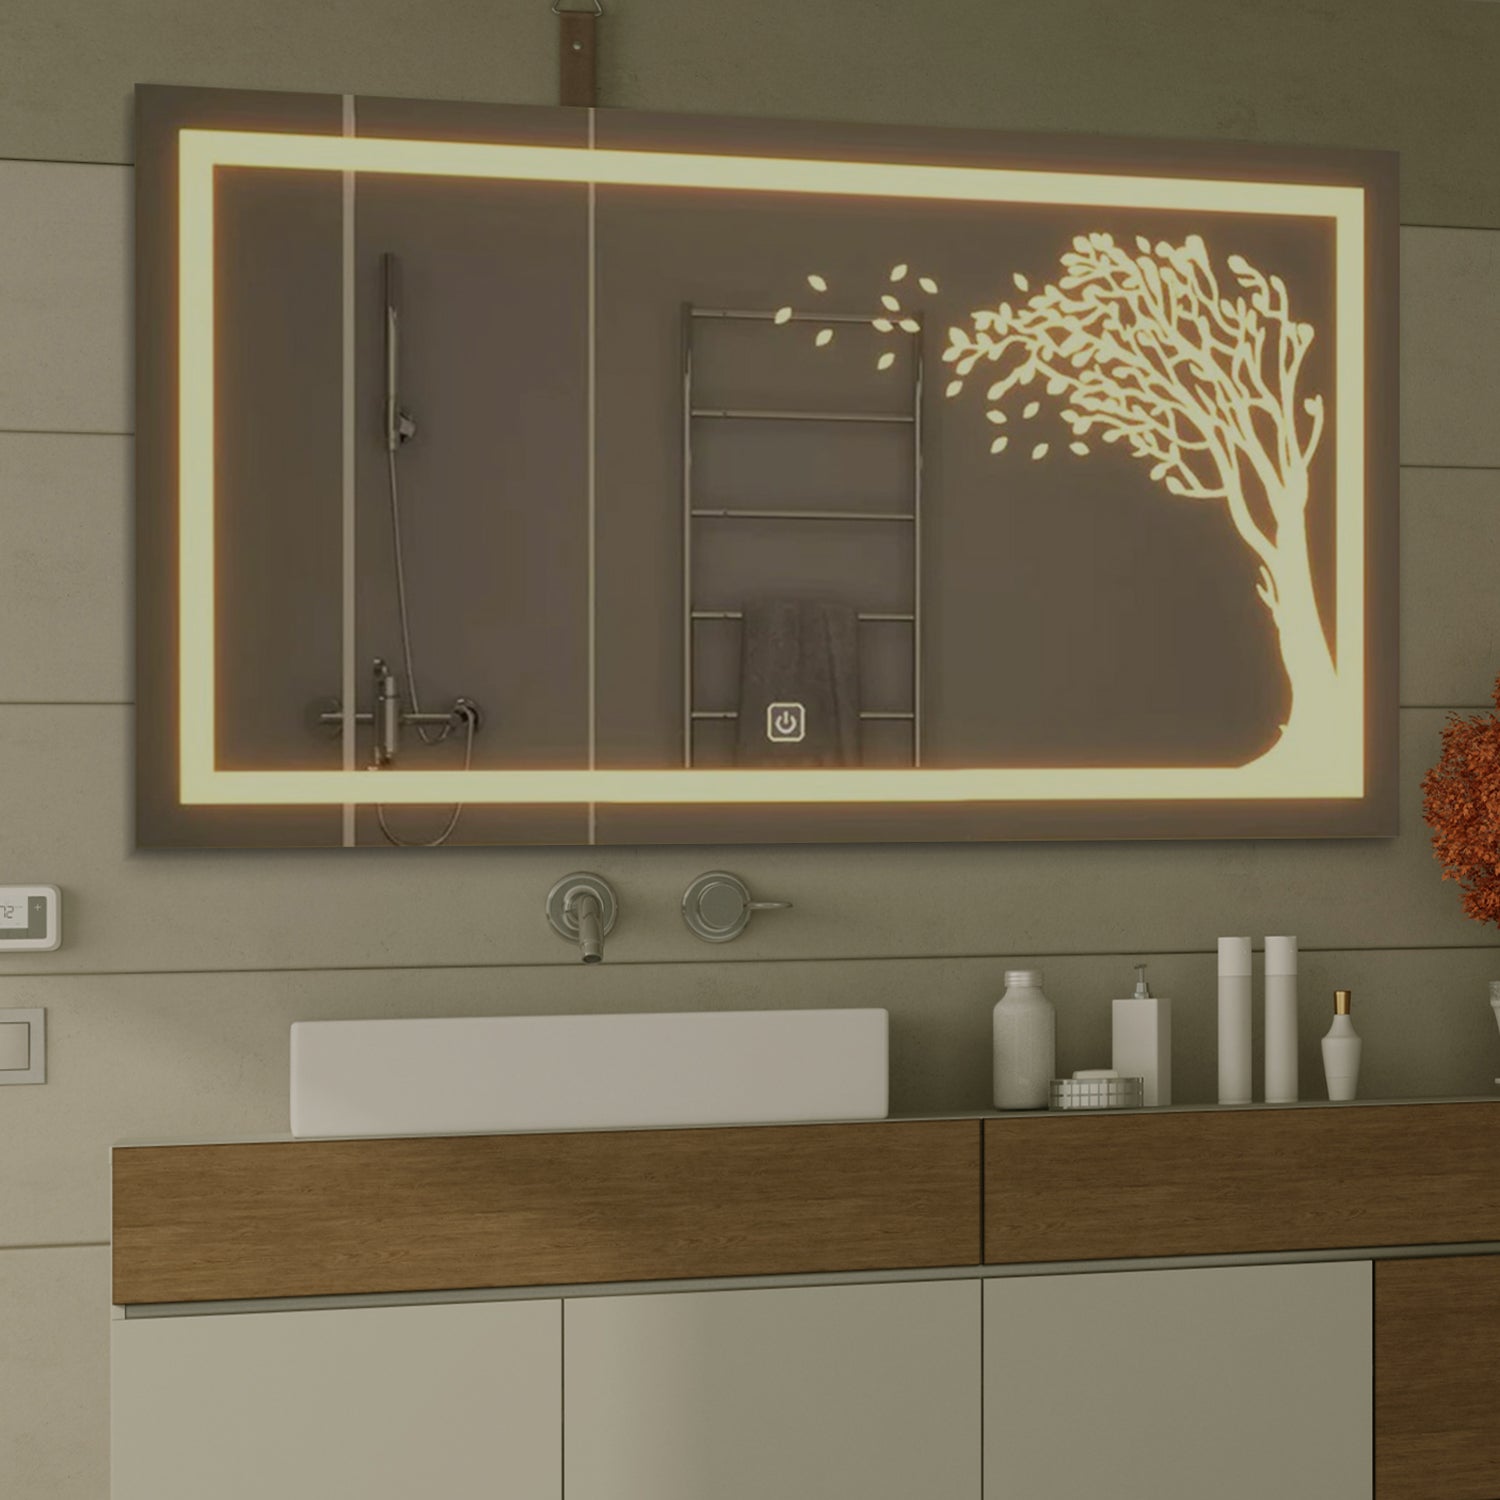 The Autumn Tree LED Rectangular Shape Bathroom Mirror